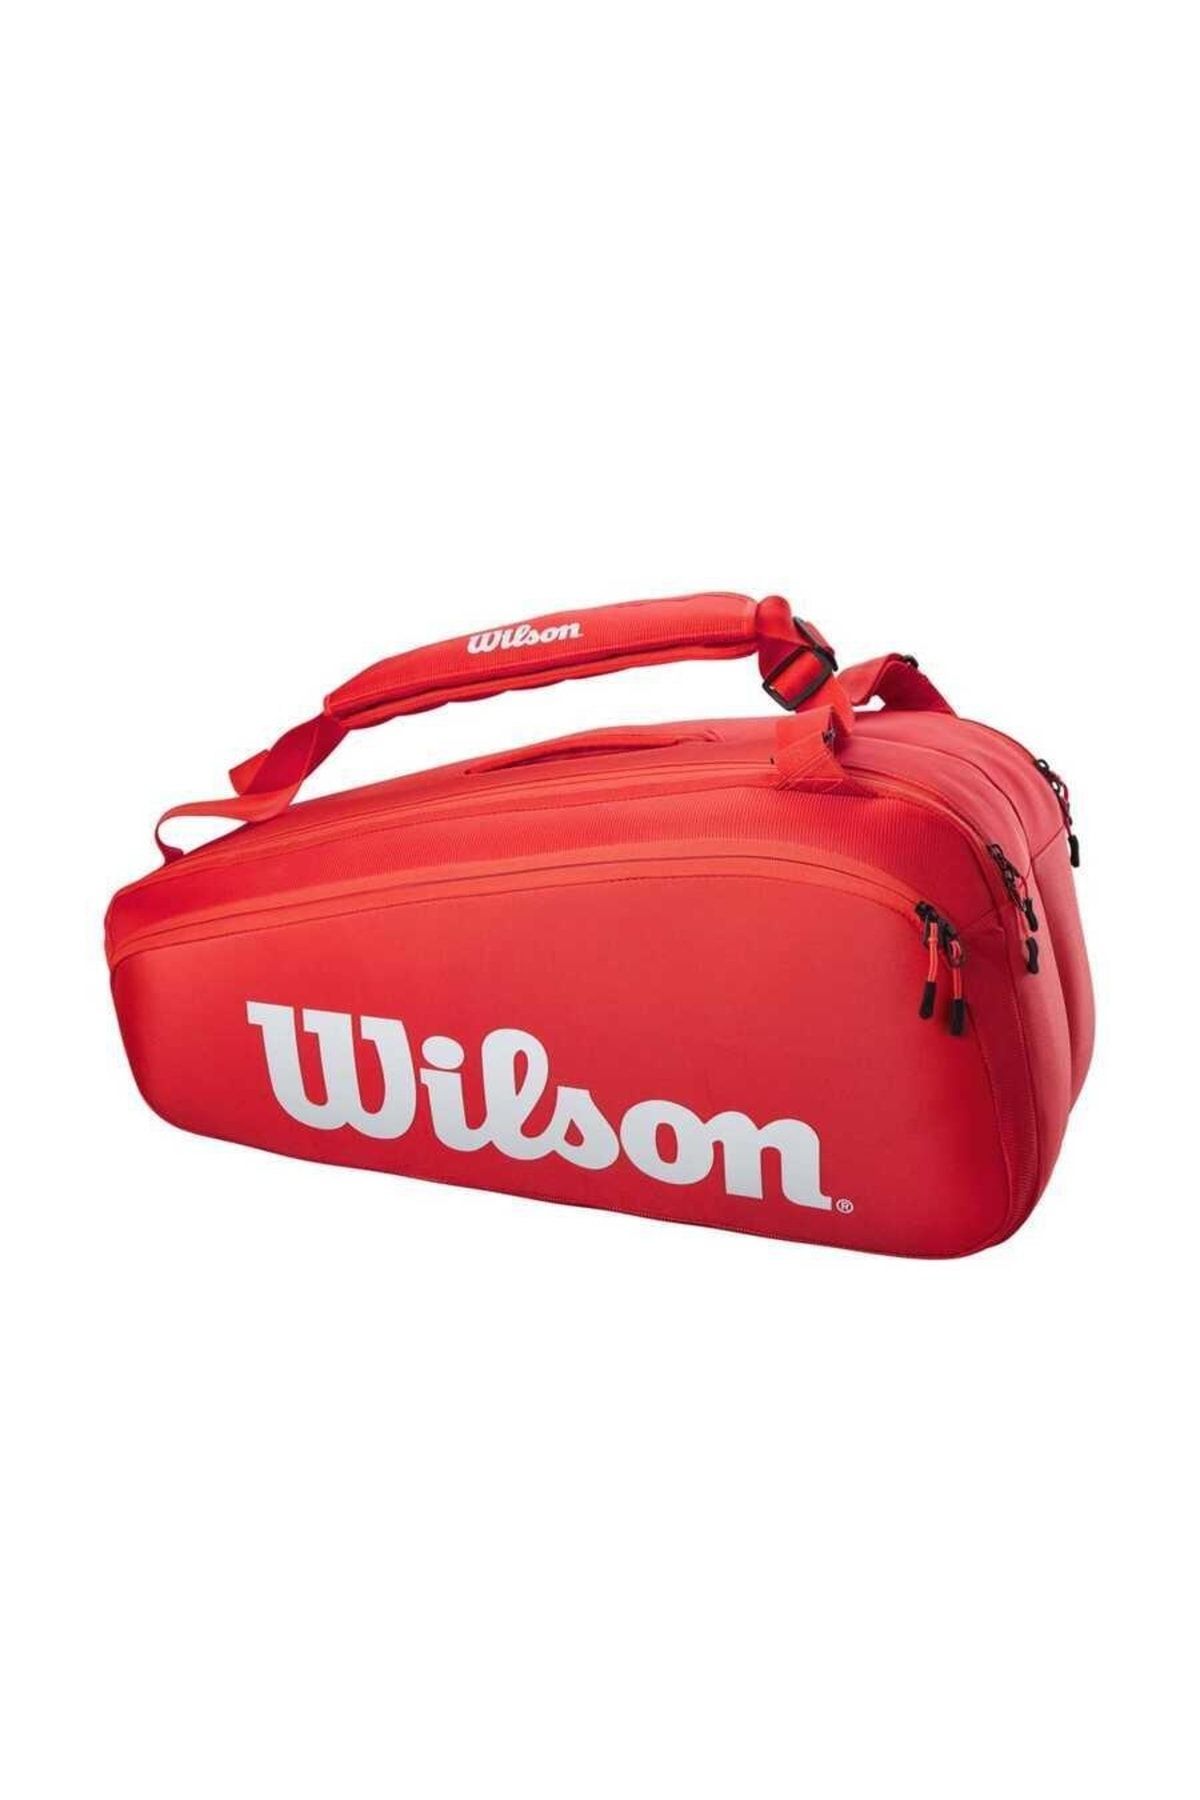 Wilson Super Tour 9lu Kırmızı Tenis Çantası Wr8010501001